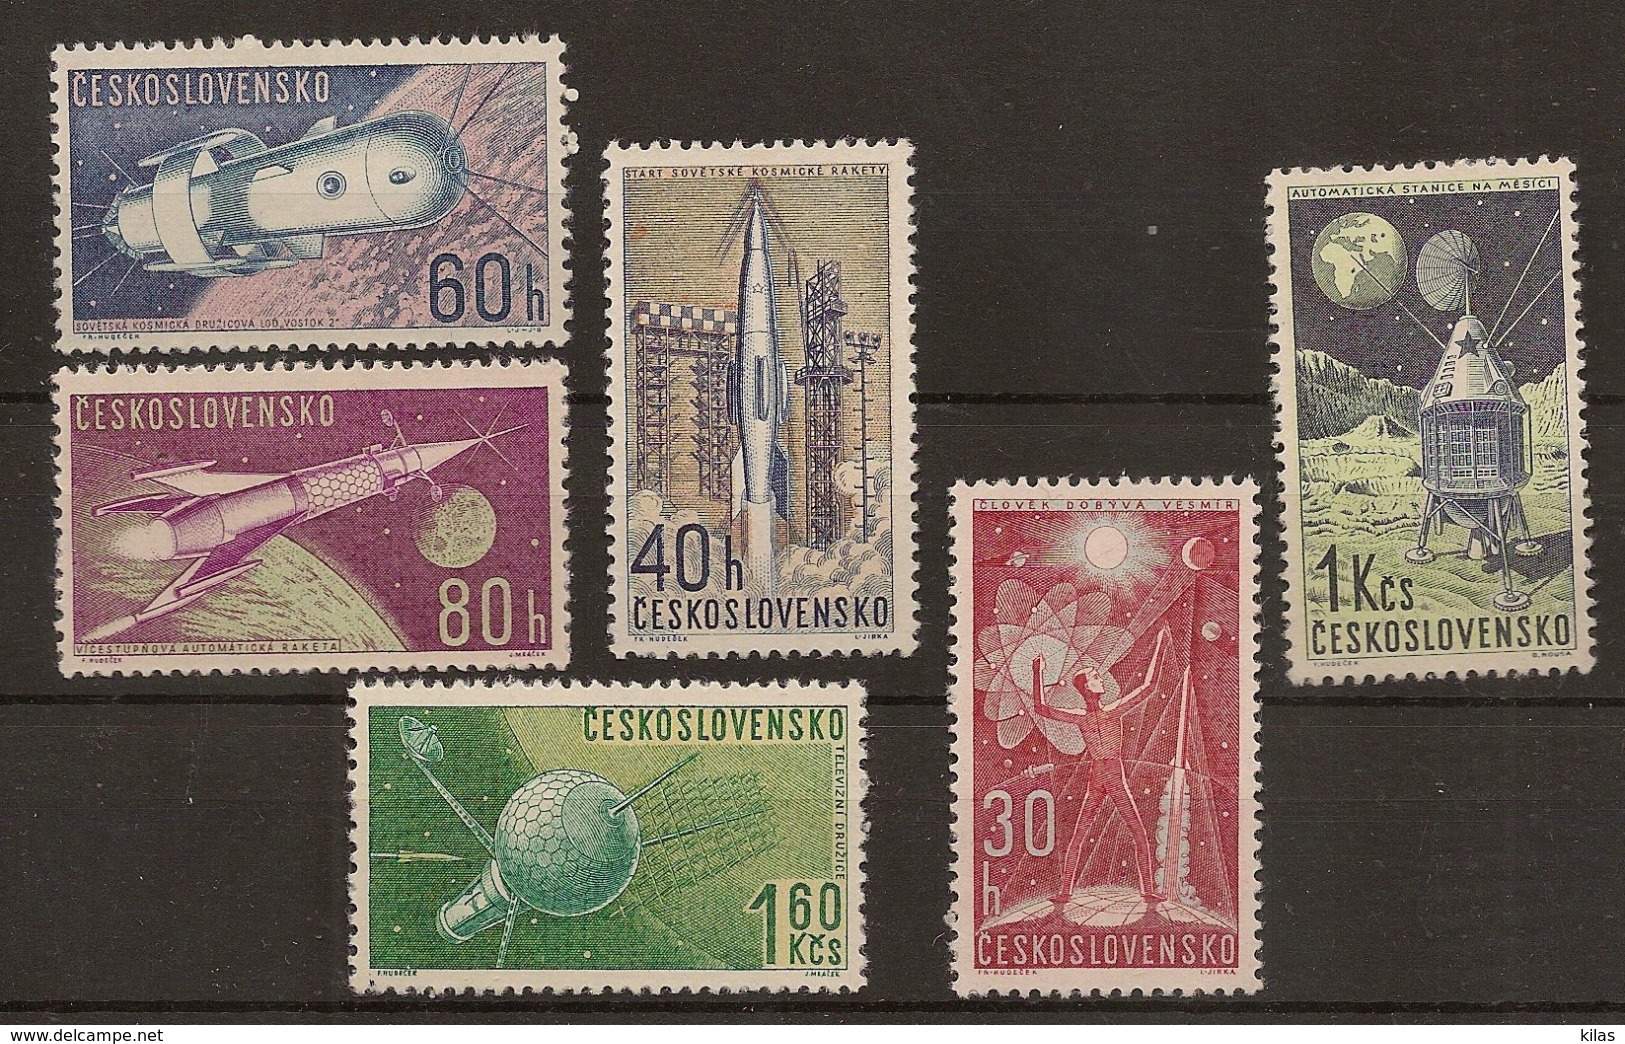 CZECHOSLOVAKIA 1962 Space Flights - Europe